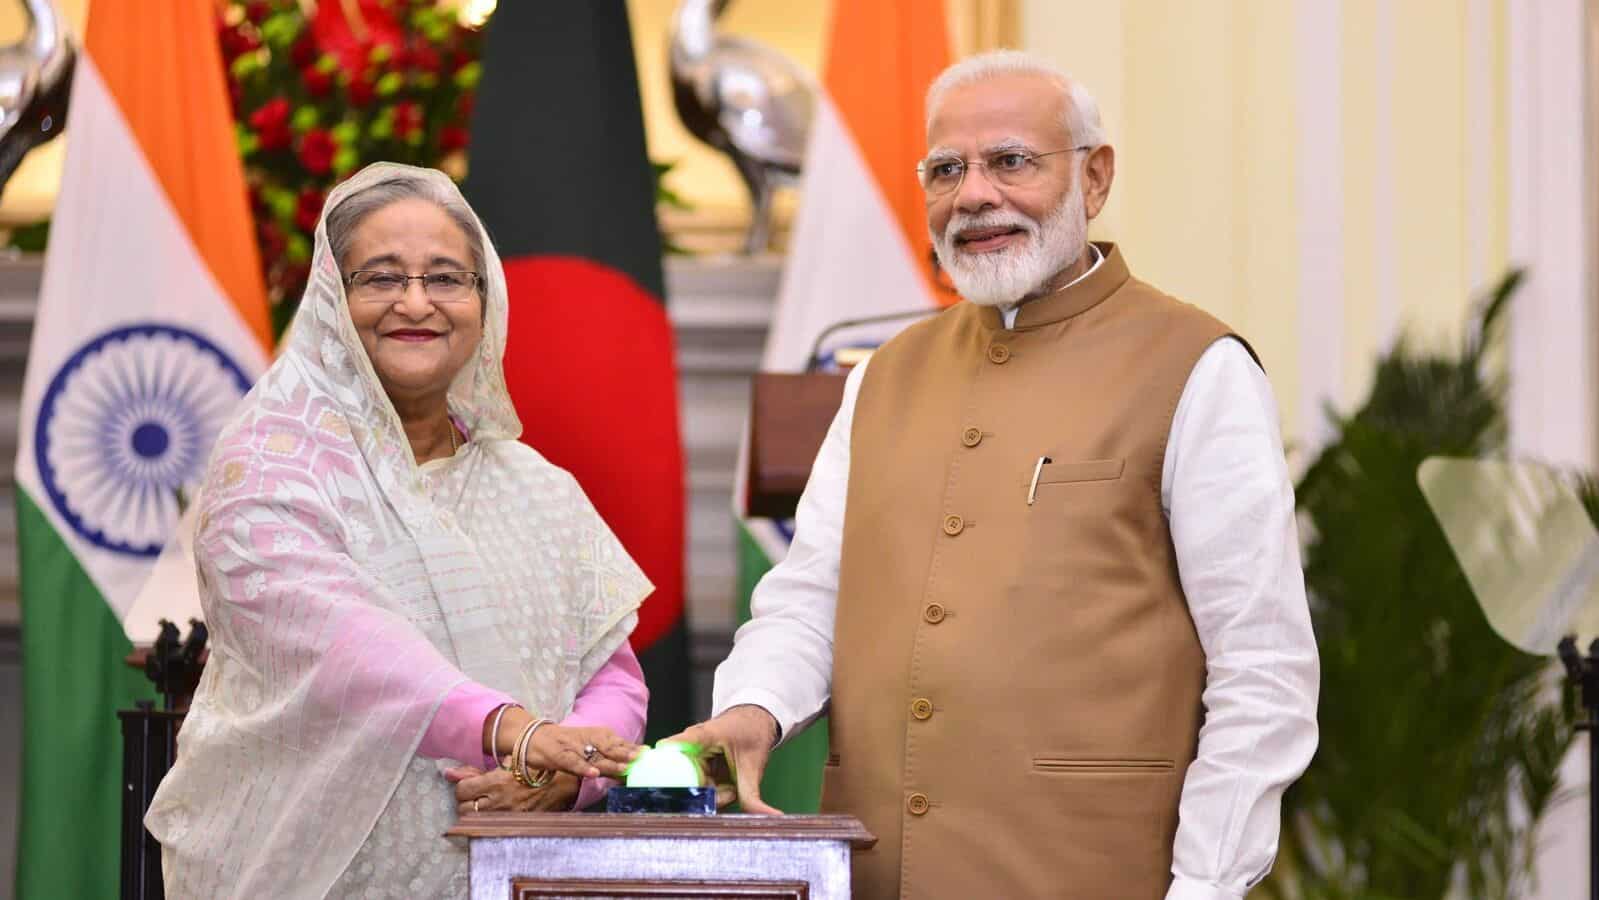 “I appreciate Modi Ji’s visionary leadership”; says Bangladesh PM Sheikh Hasina